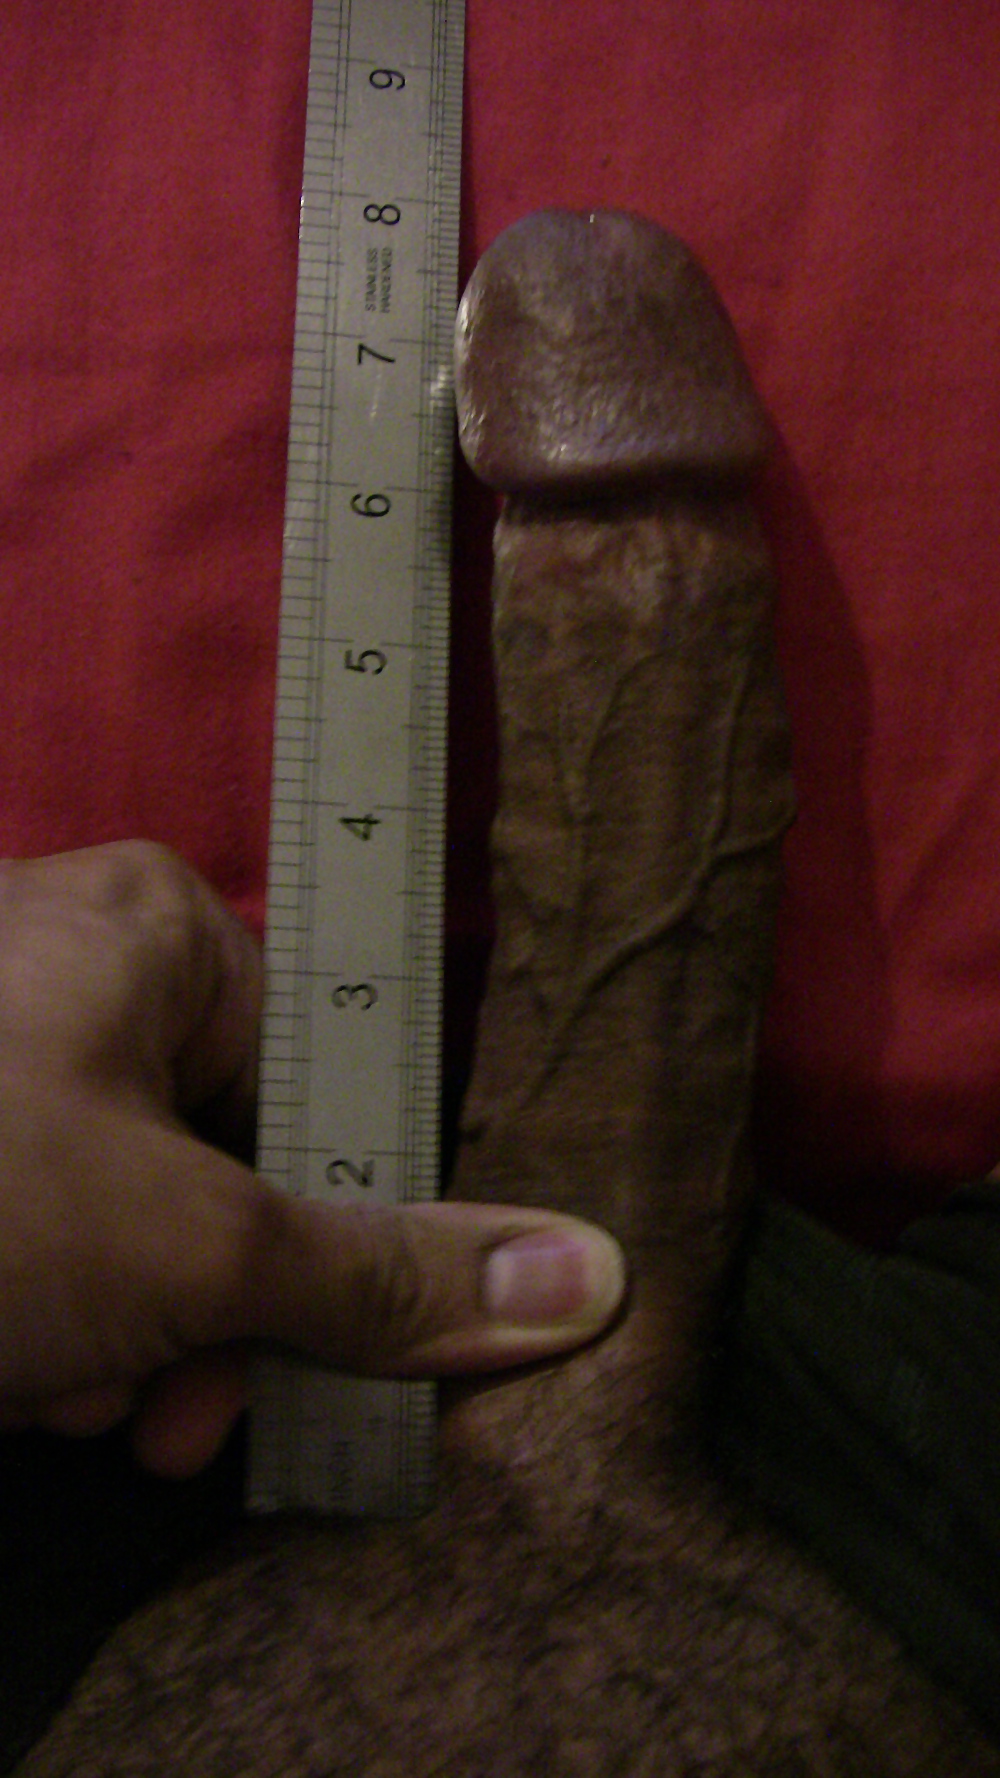 8 Inch Black Cock Porn - My big black cock measured 8 inches BBC - 4 Pics | xHamster